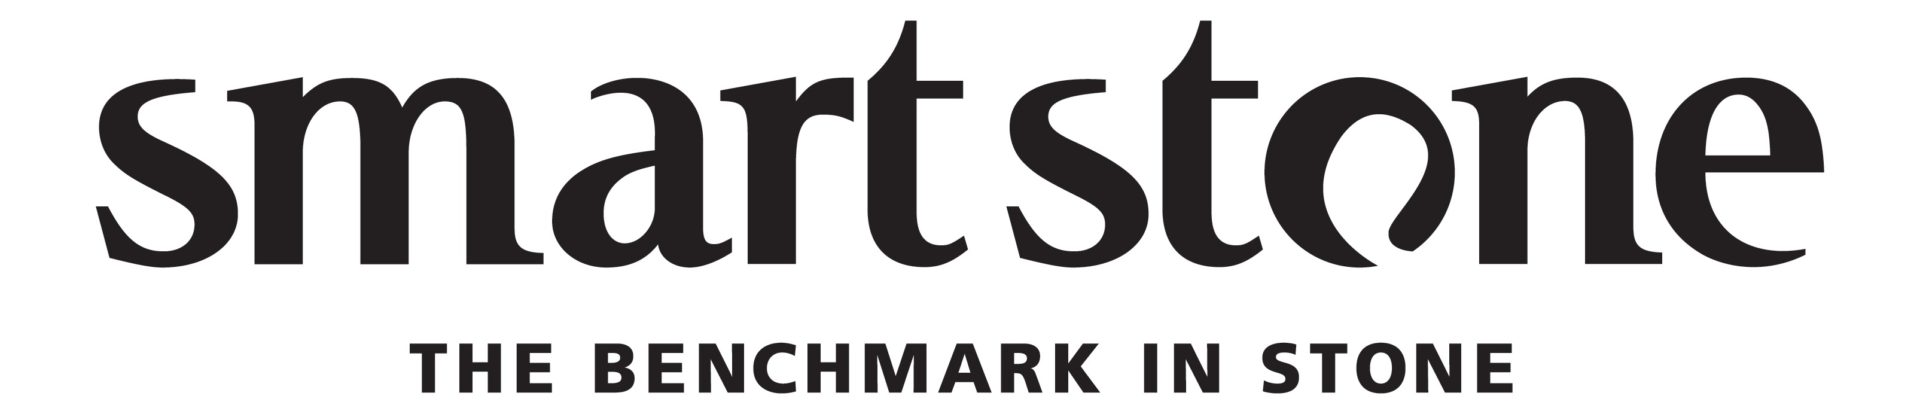 https://nepeanstone.com.au/wp-content/uploads/2021/03/Smartstone-logo.jpg